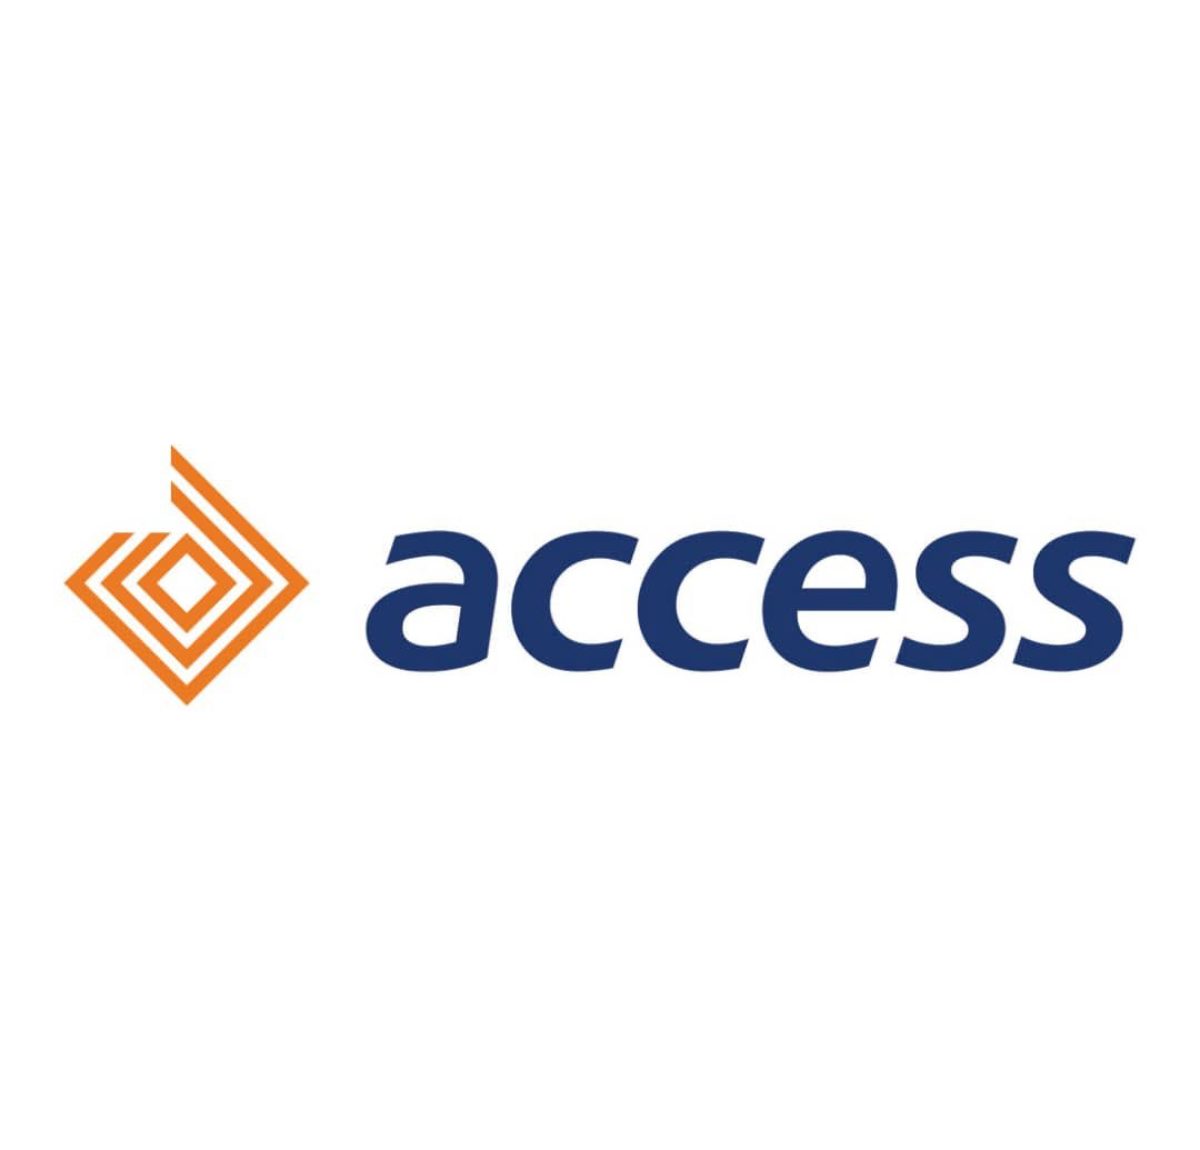 Access-and-Diamond-Bank-logo-brand-spur-nigeria-1-1200x1150